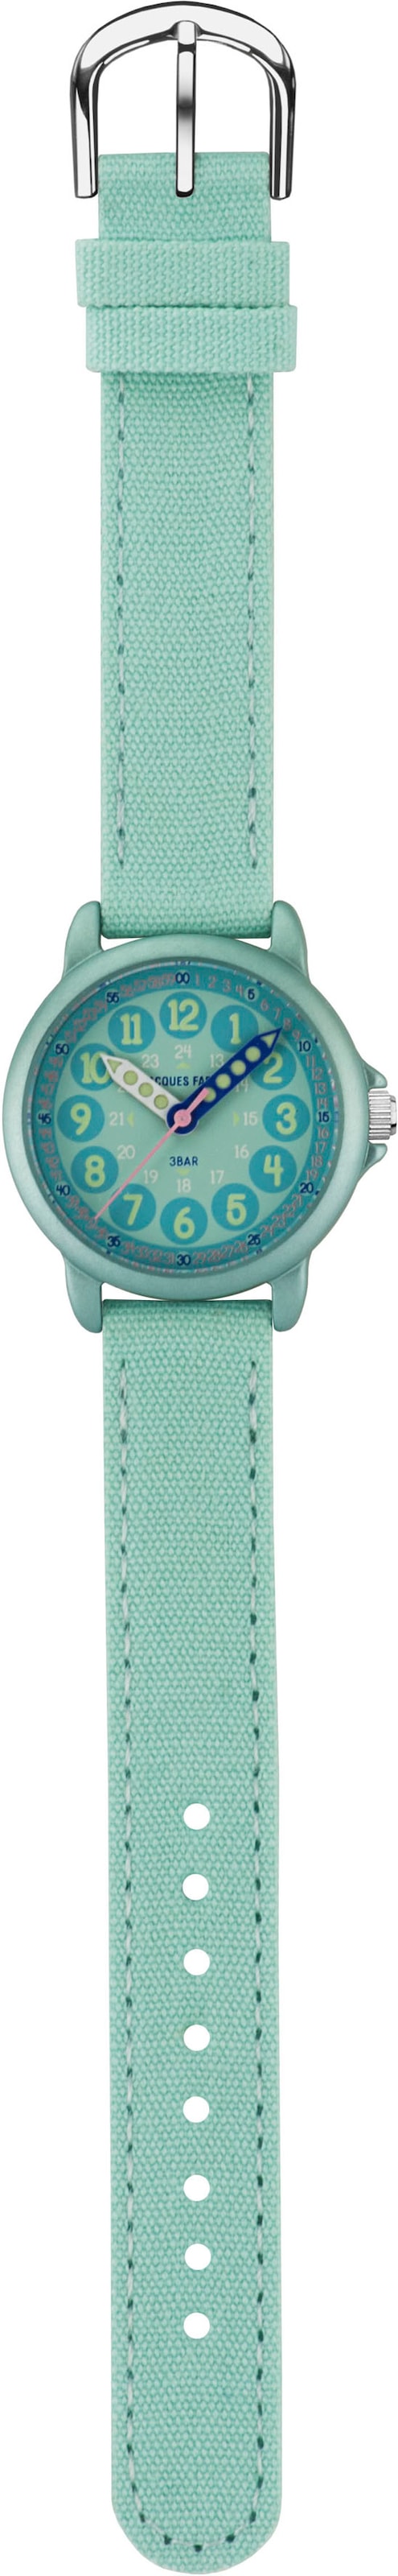 Jacques Farel Quarzuhr »ORGT 1113«, Armbanduhr, Kinderuhr, Mädchenuhr, ideal auch als Geschenk